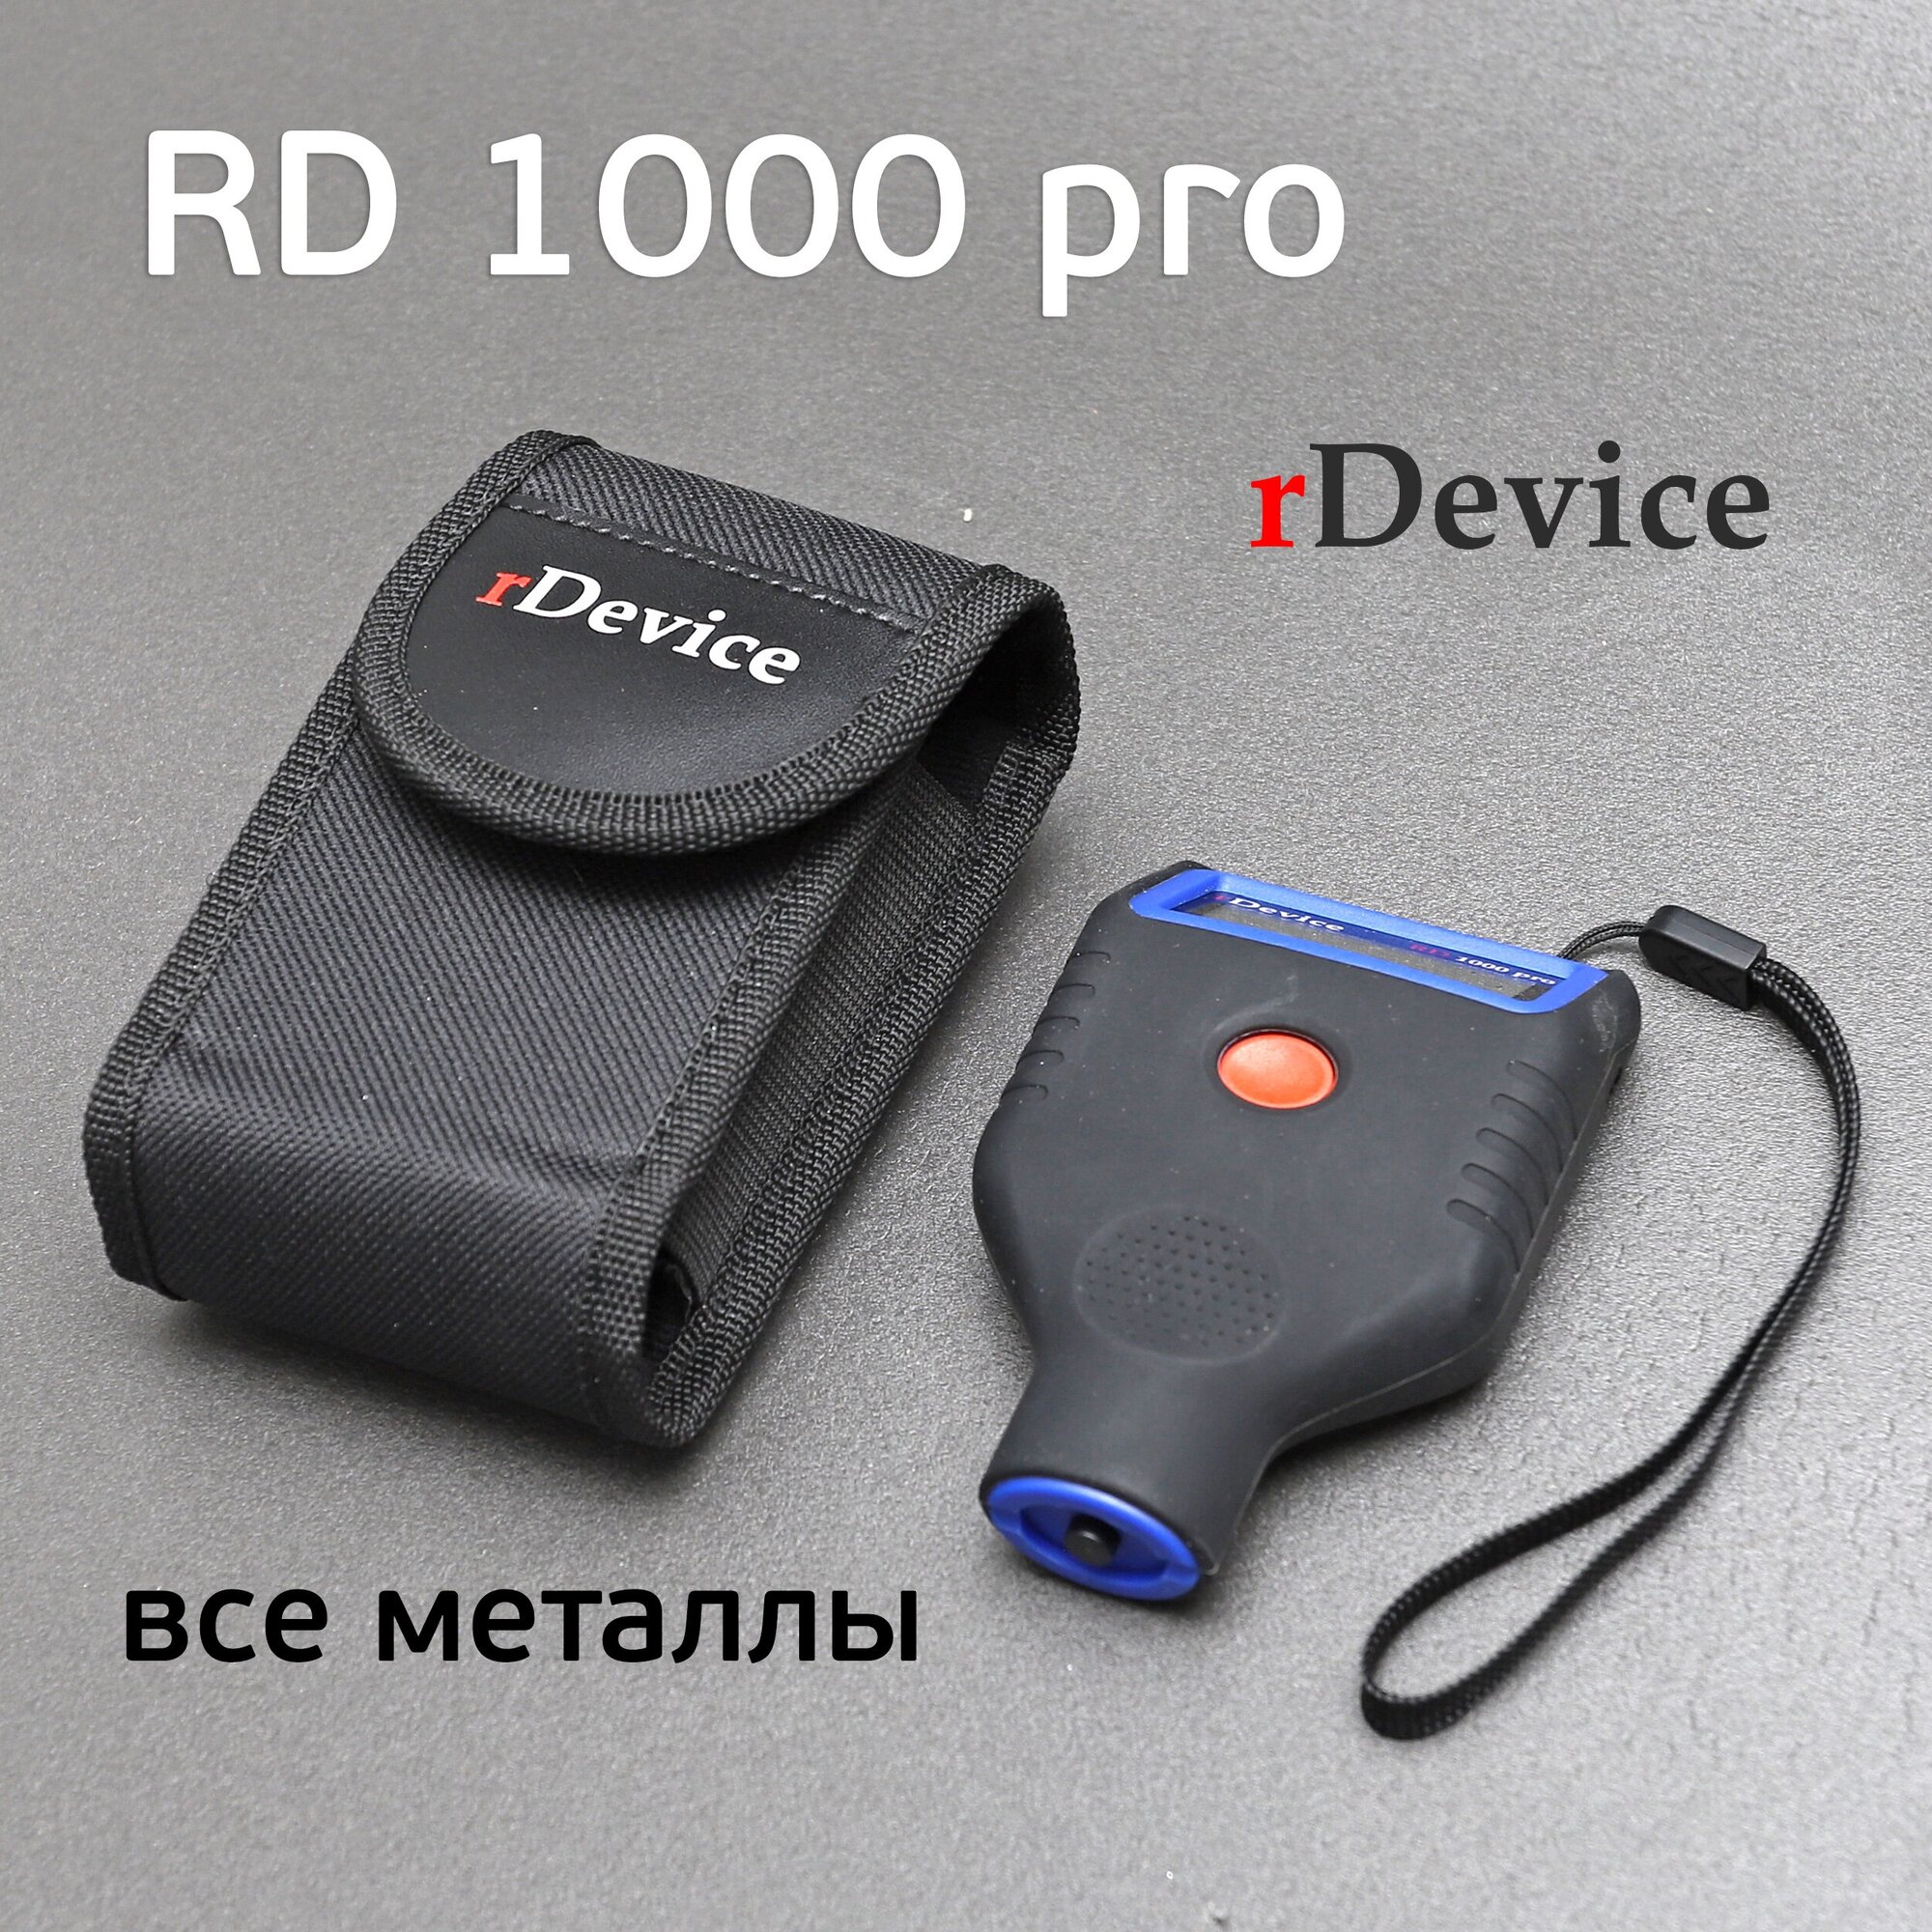 Толщиномер ЛКМ rDevice RD-1000 Pro все металлы (рубиновый датчик) до 2мм